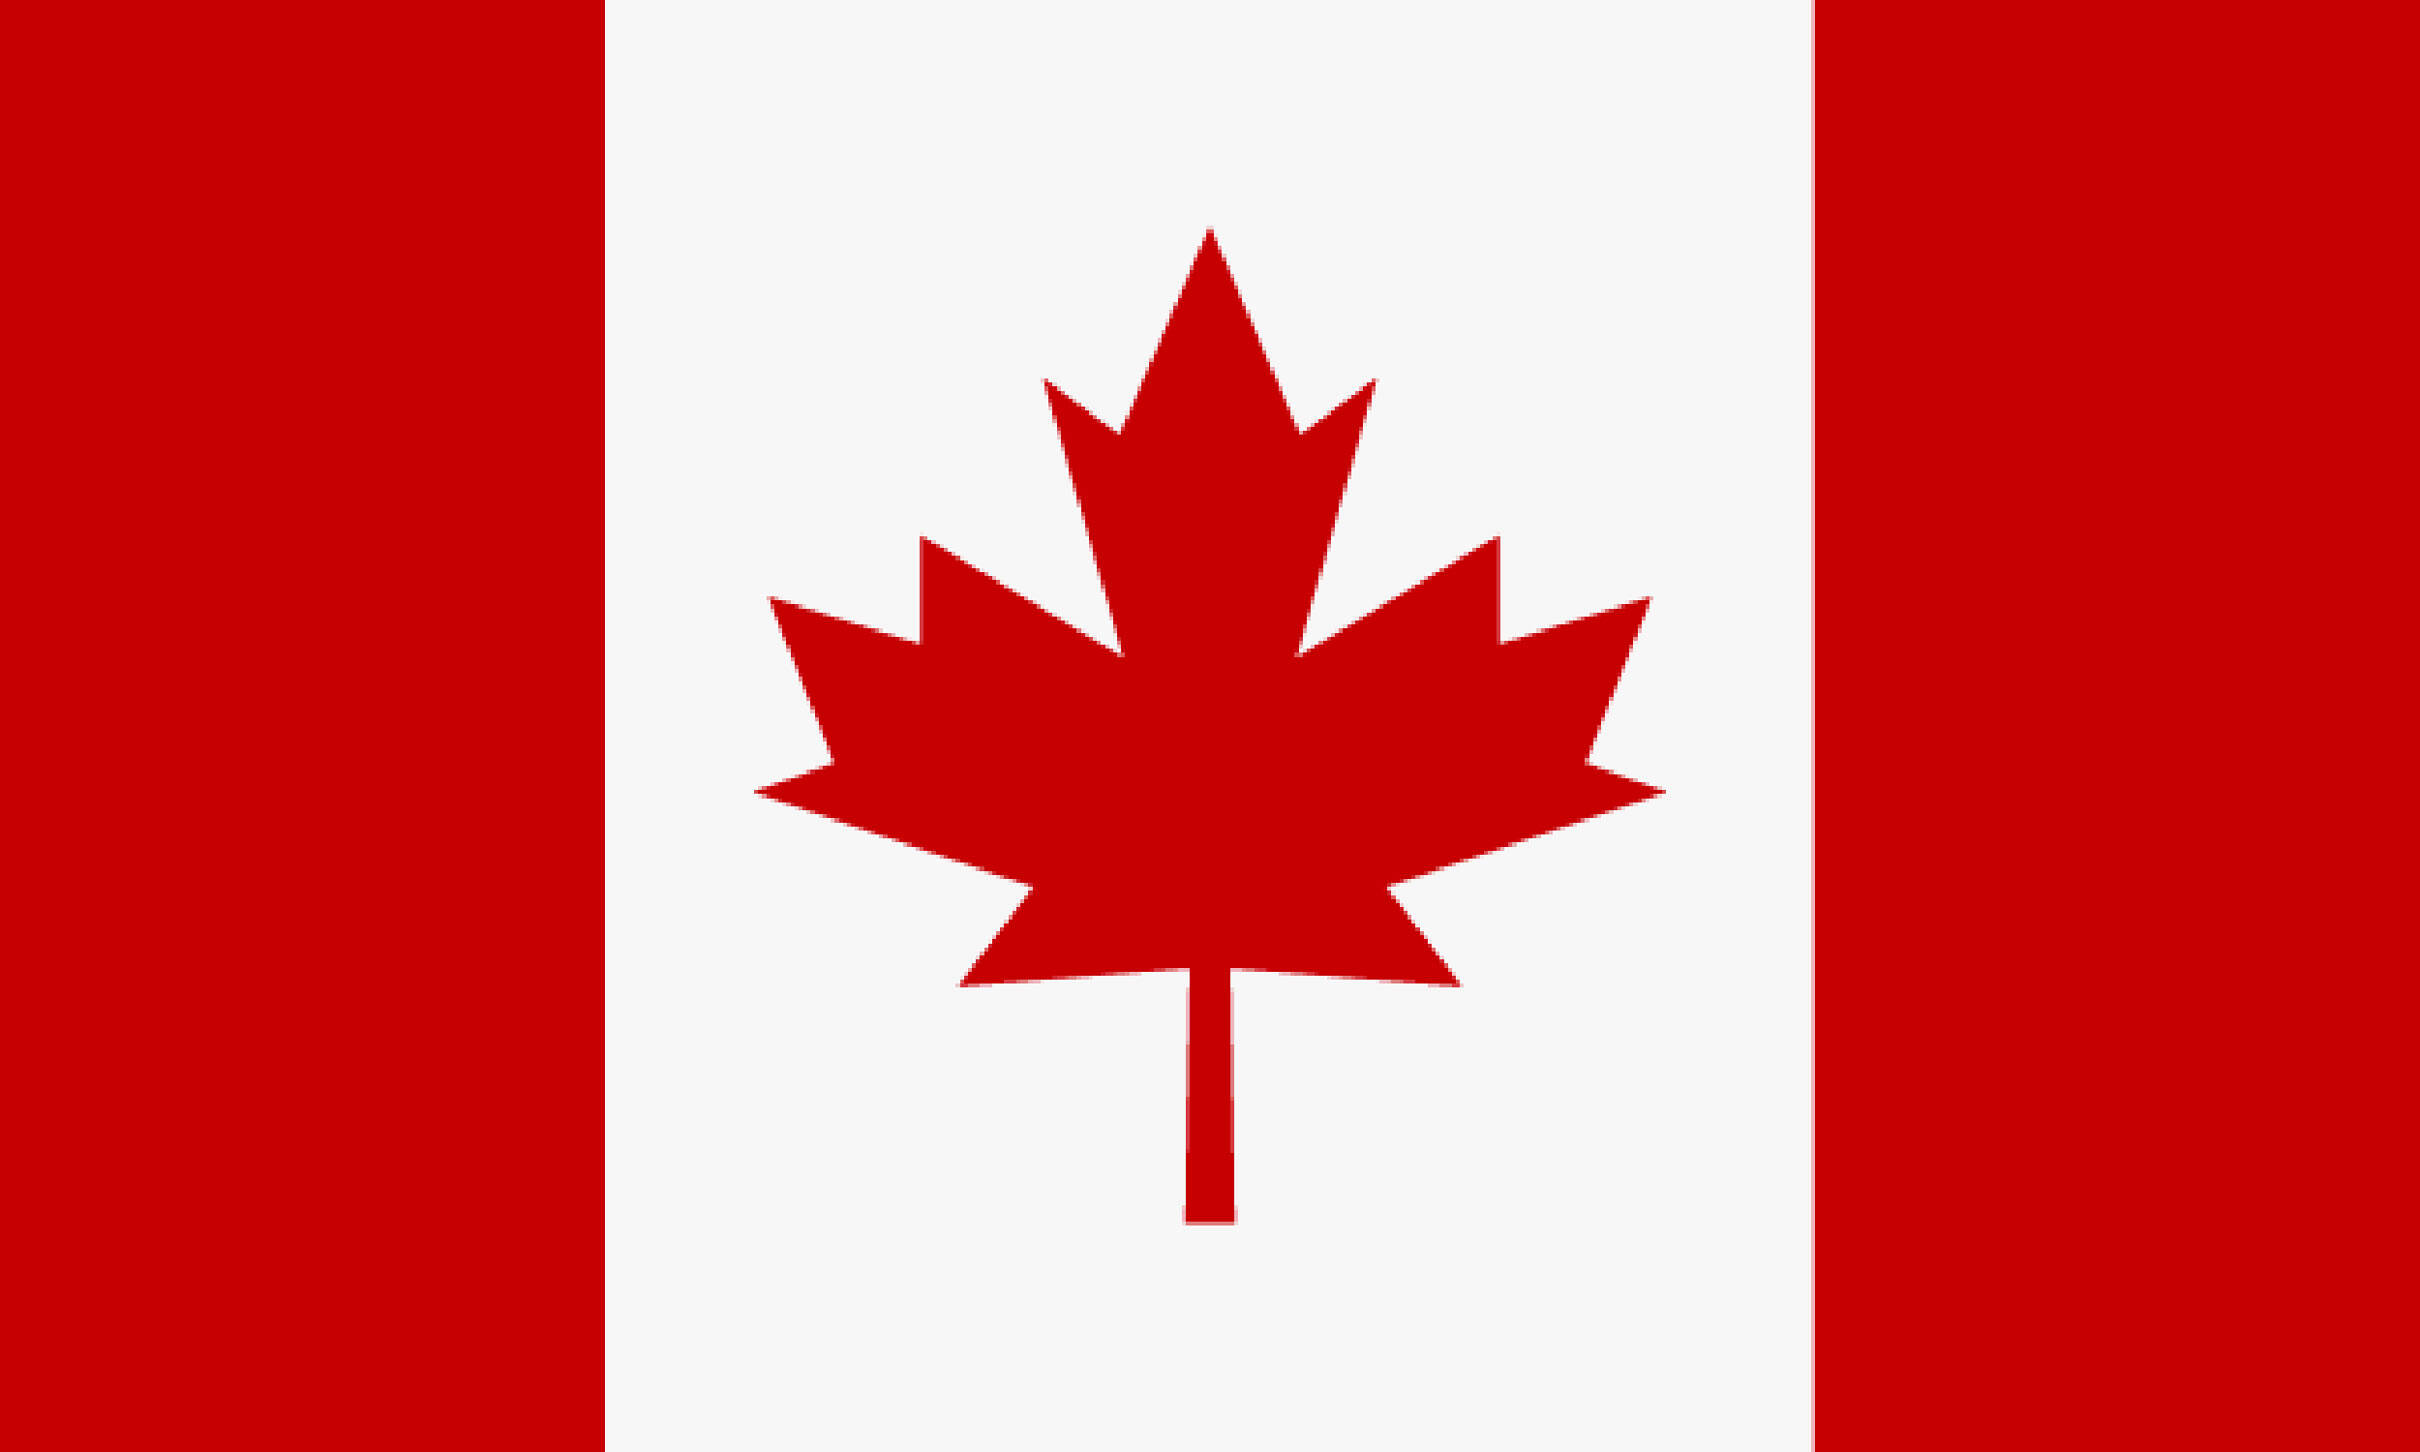 флаг и герб канада